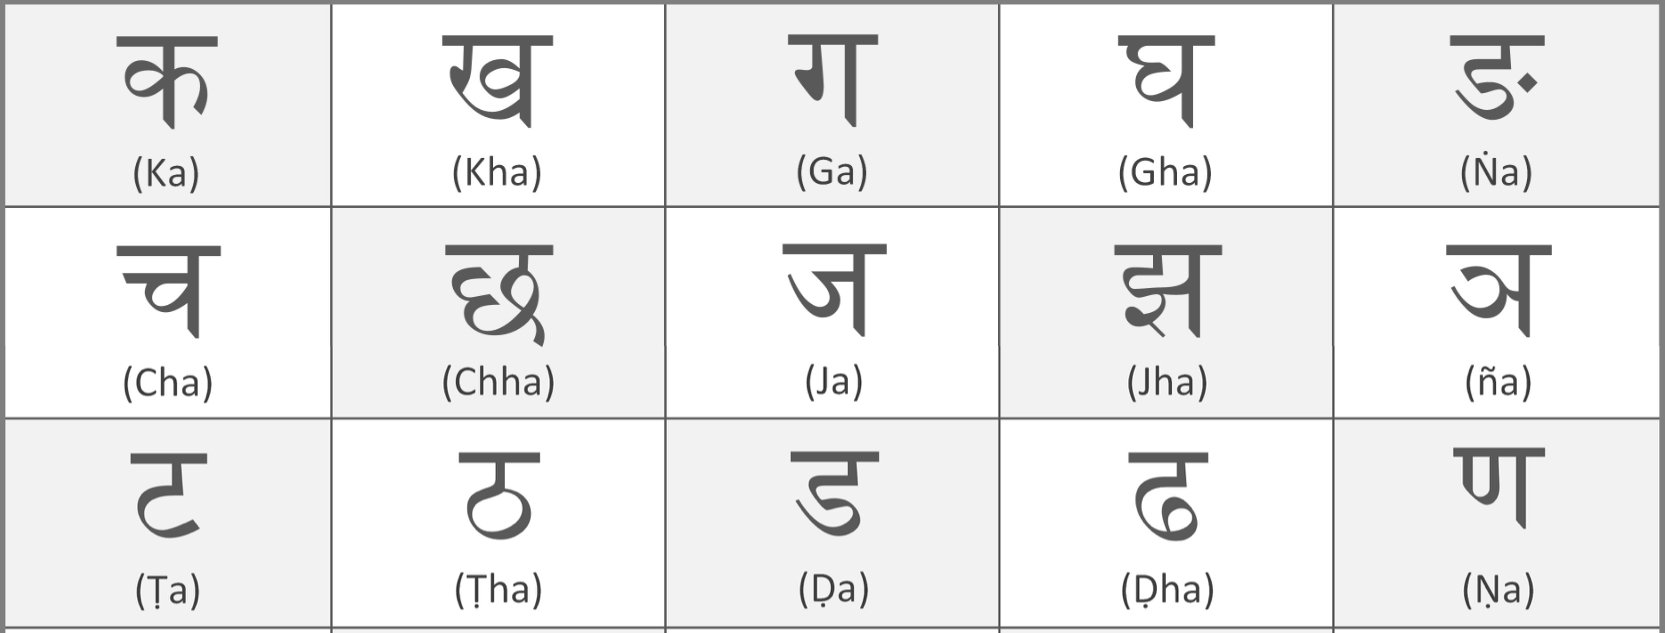 hindi alphabet to bengali alphabet